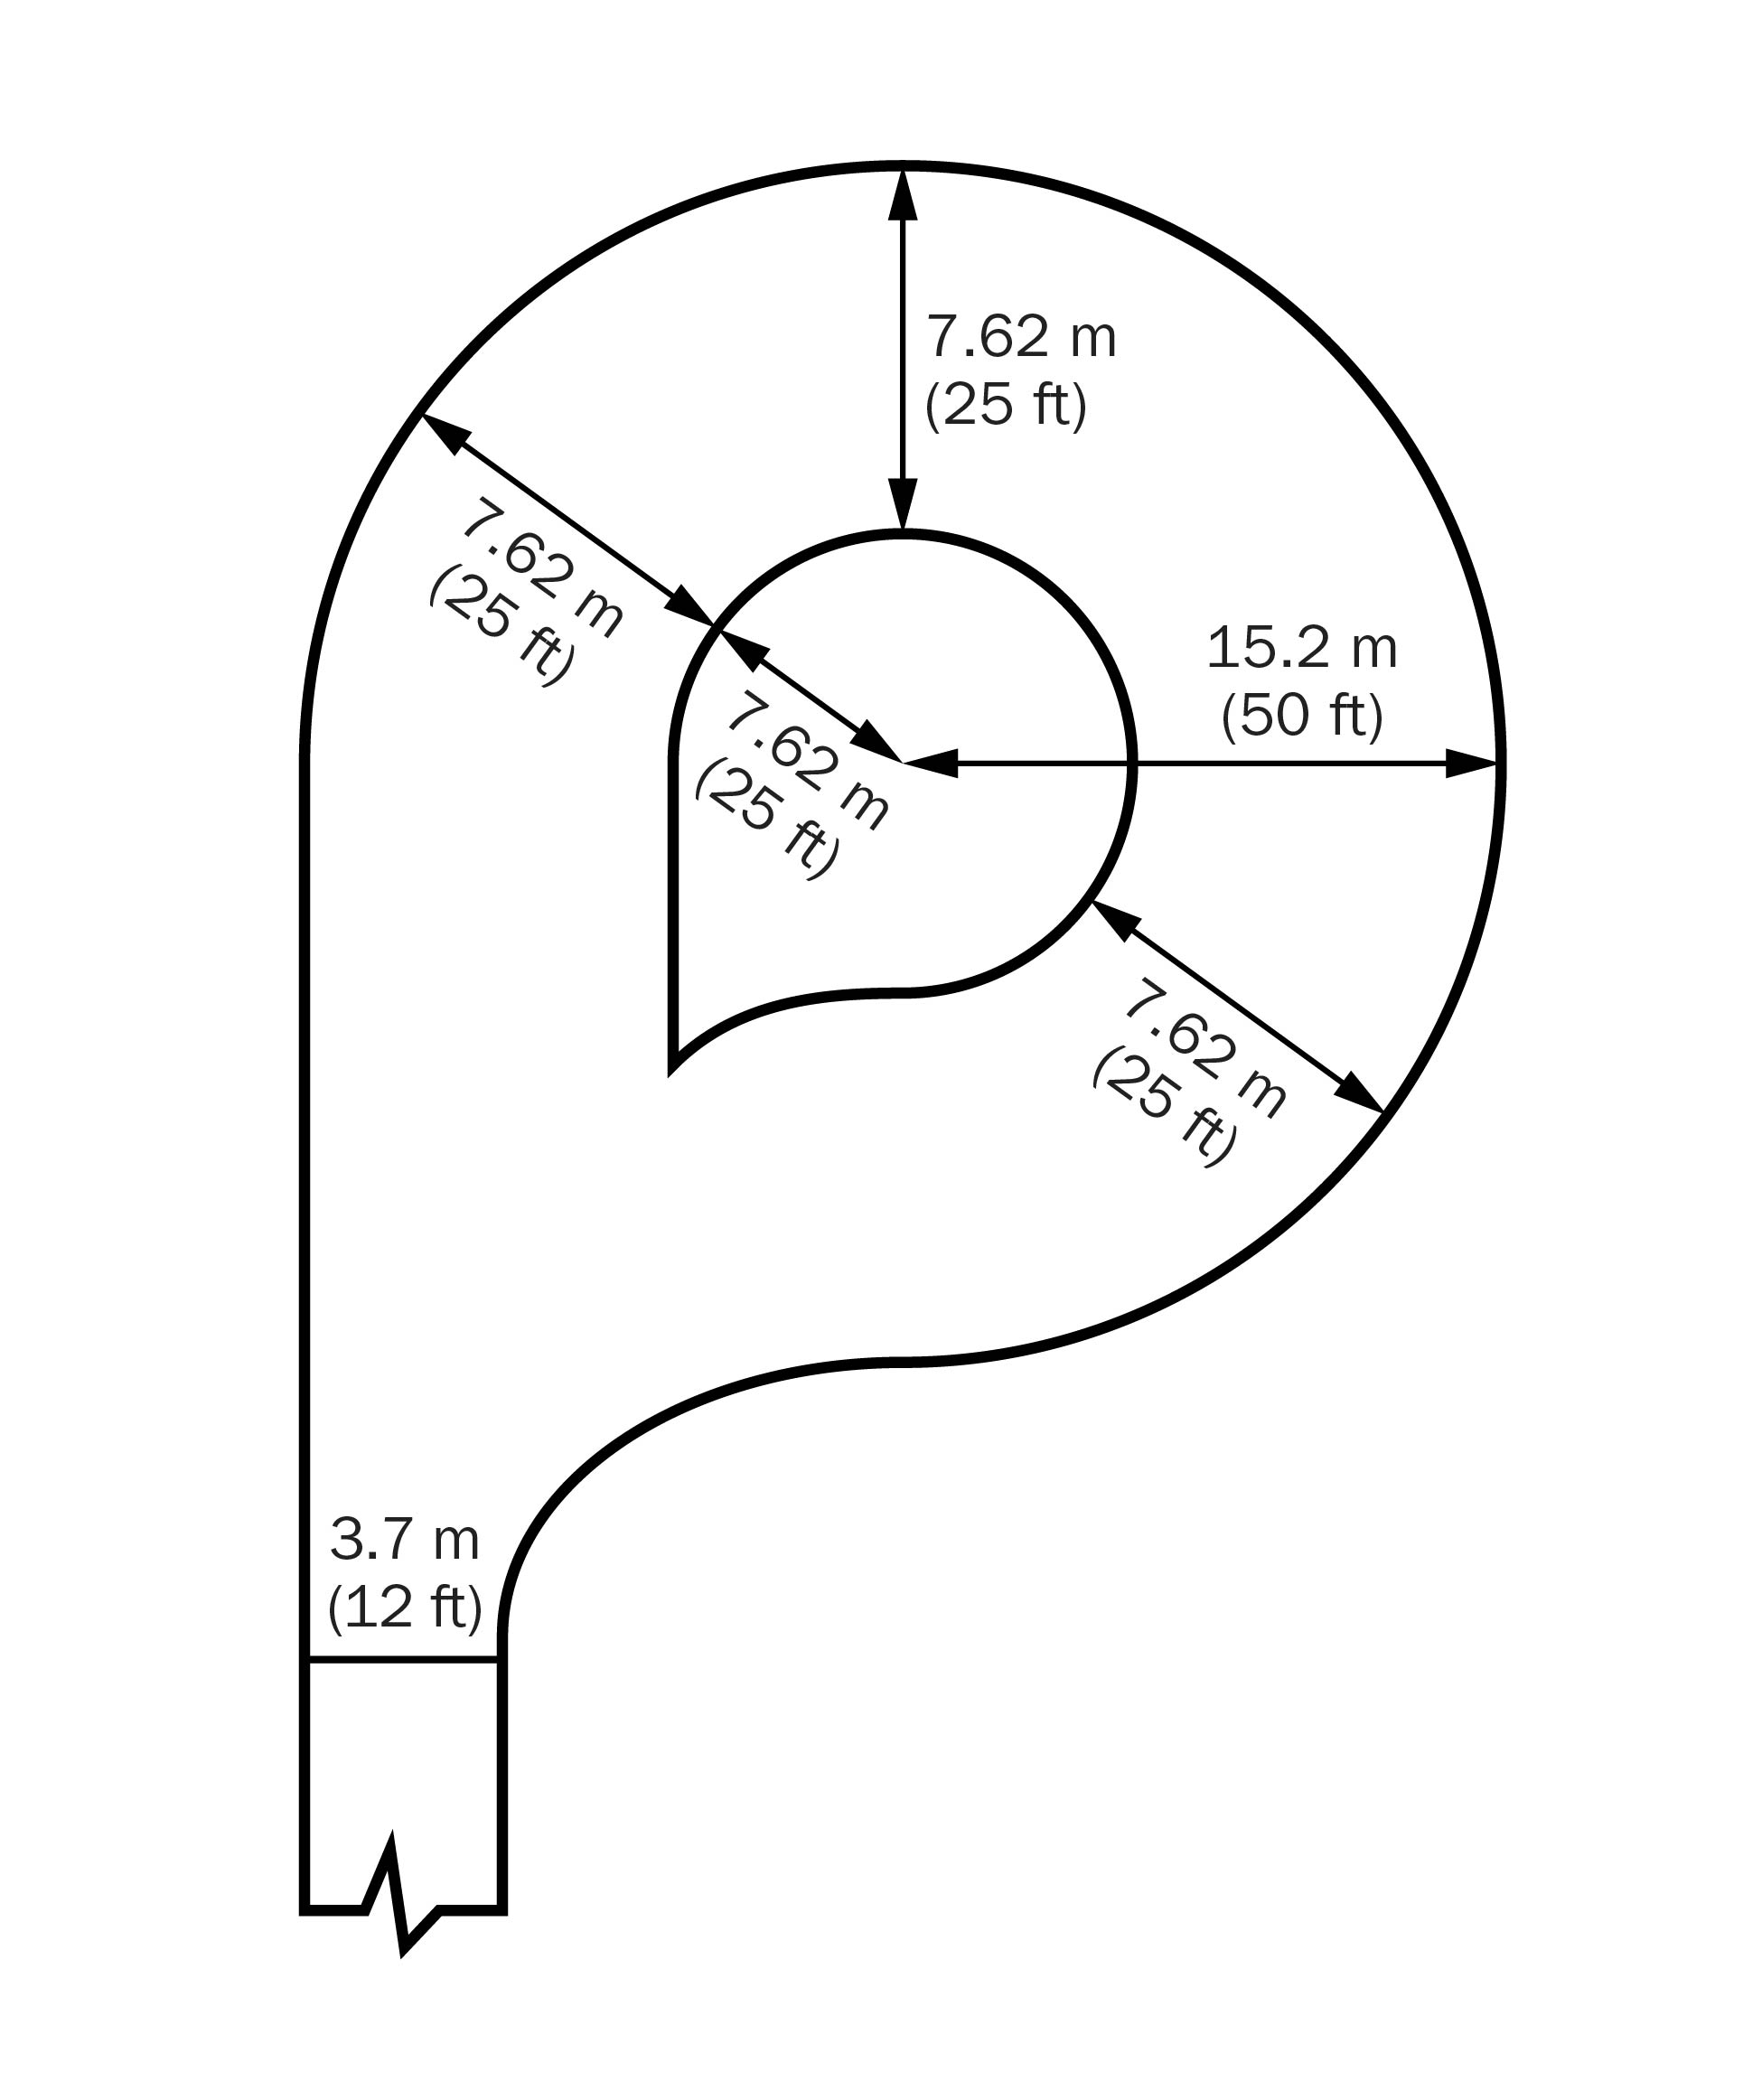 diagram of a circular laneway design